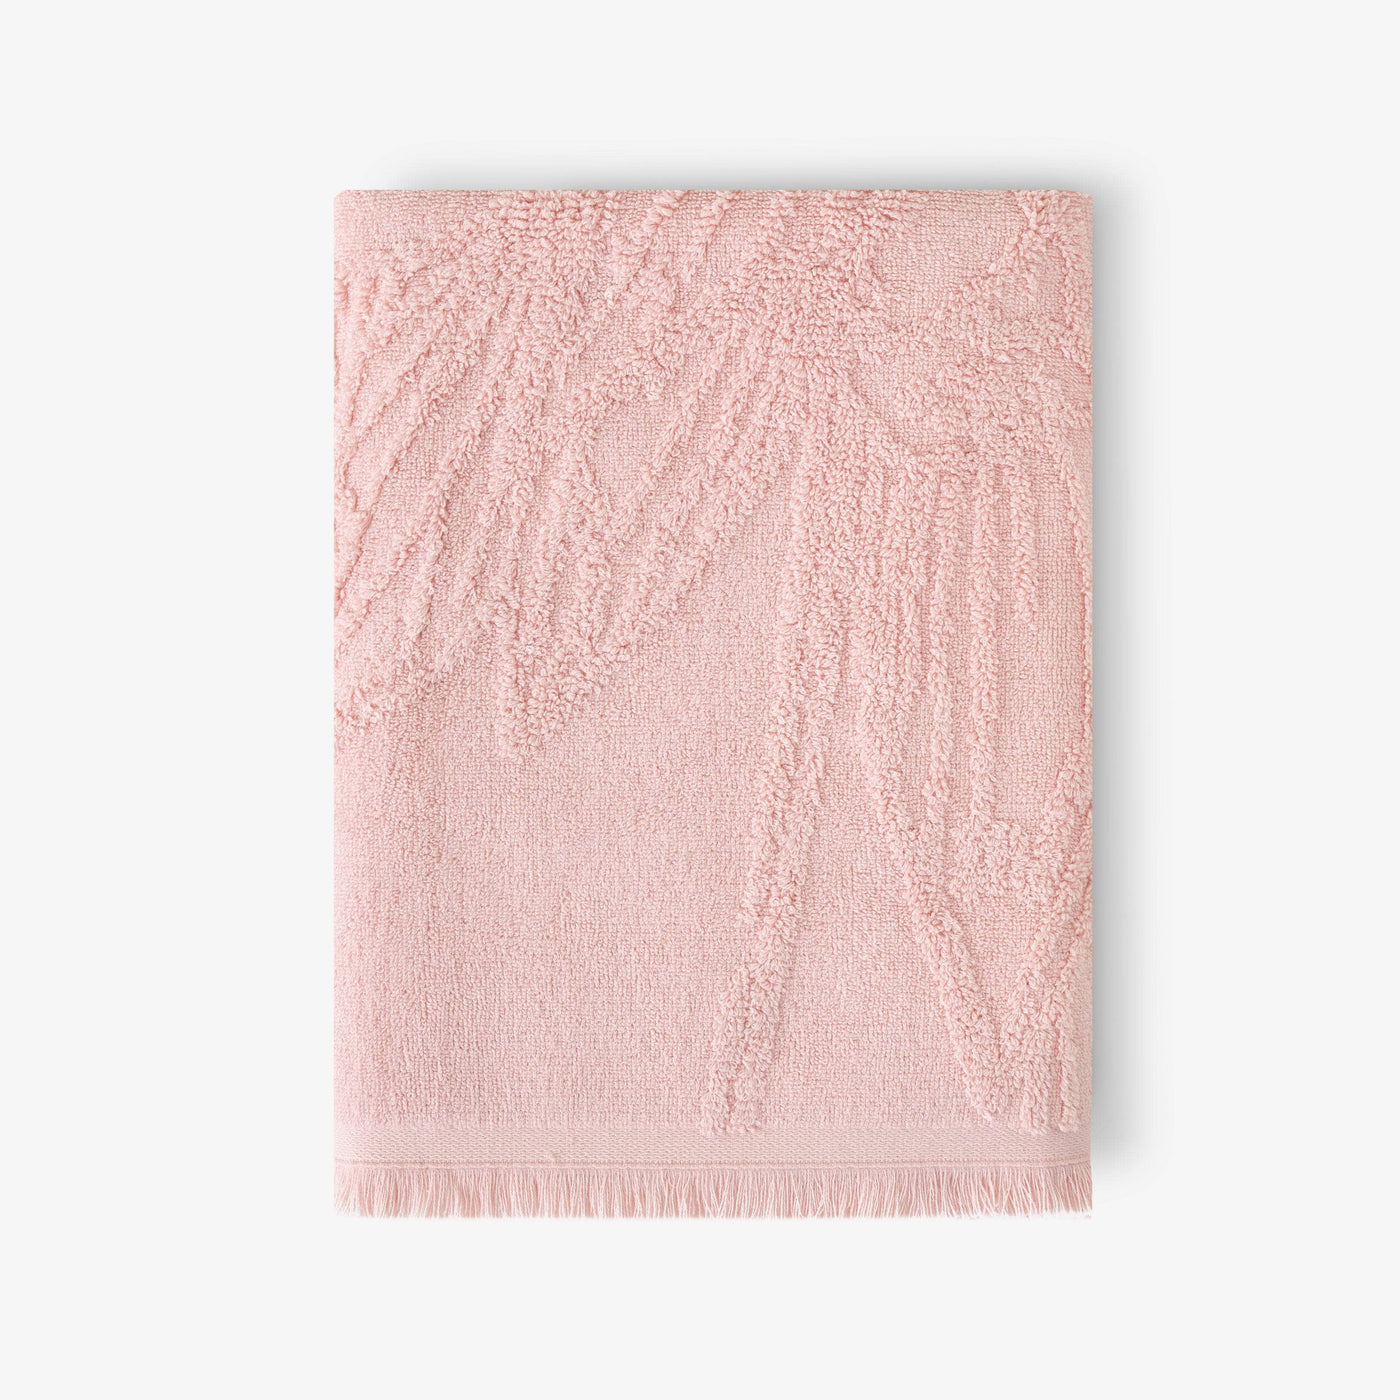 Barbara Set of 2 Jacquard Fringed 100% Turkish Cotton Hand Towels, Pink Hand Towels sazy.com